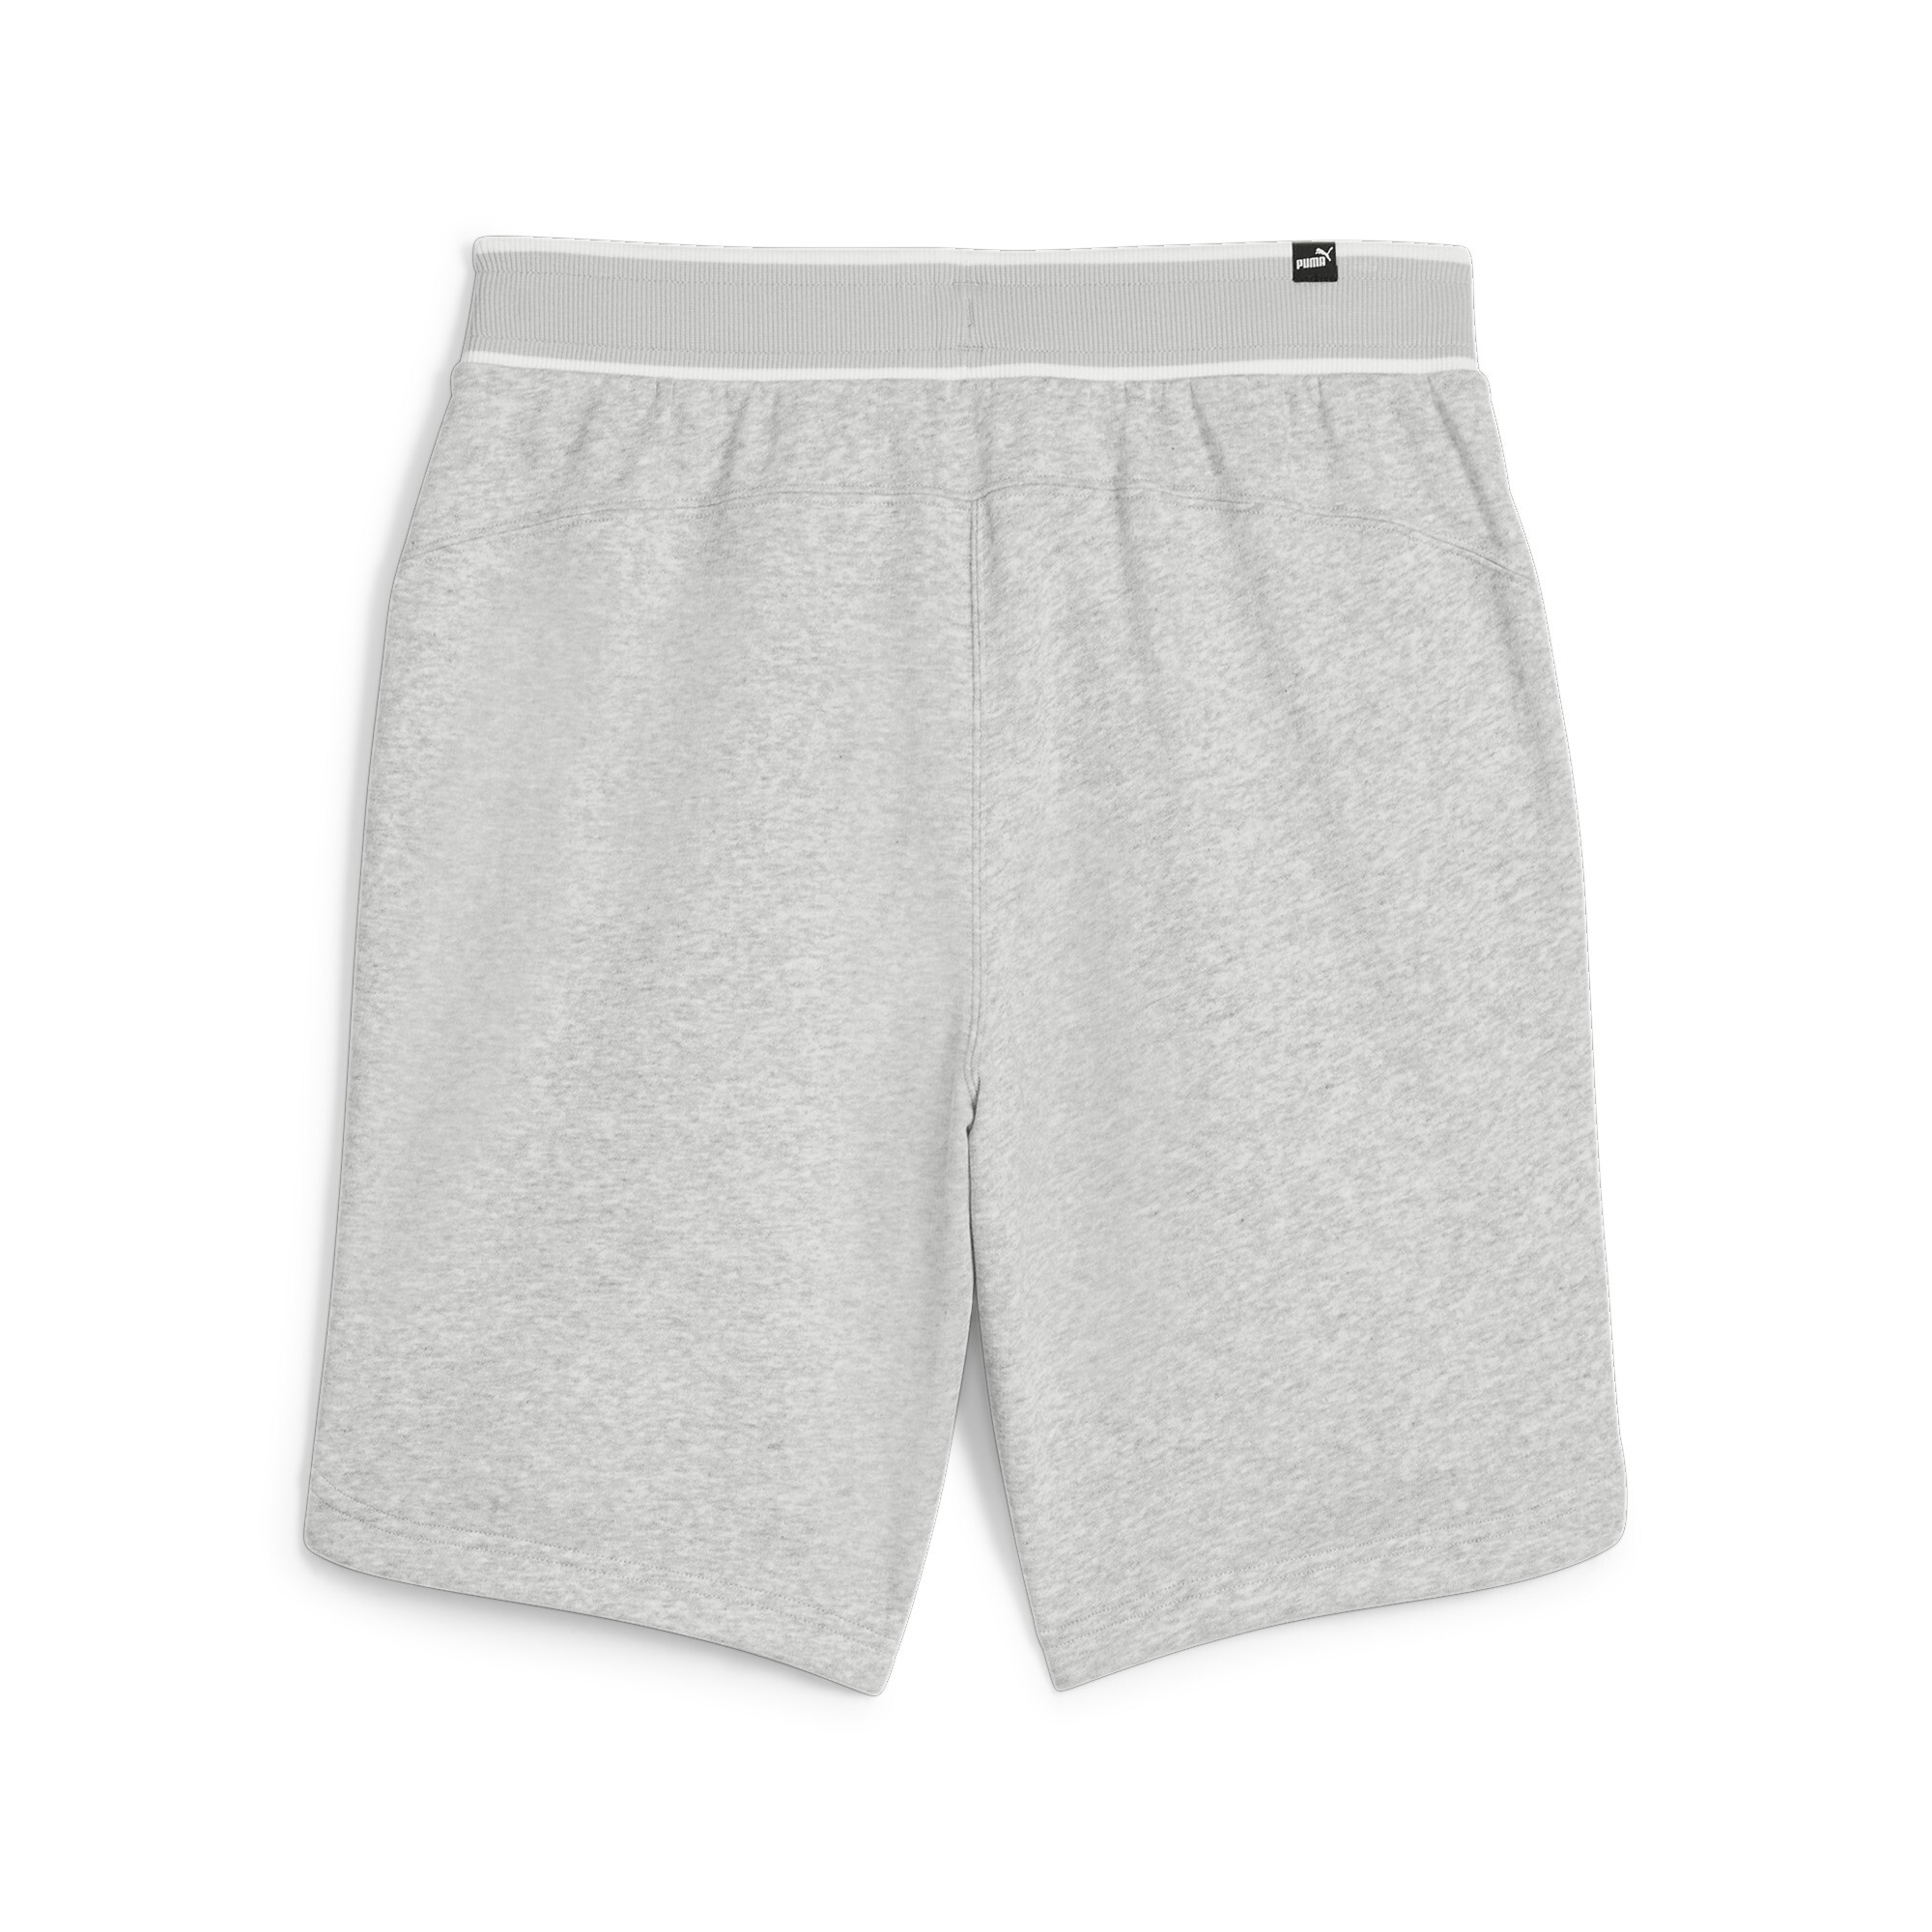 Men's Puma SQUAD Shorts, Gray, Size 3XL, Clothing